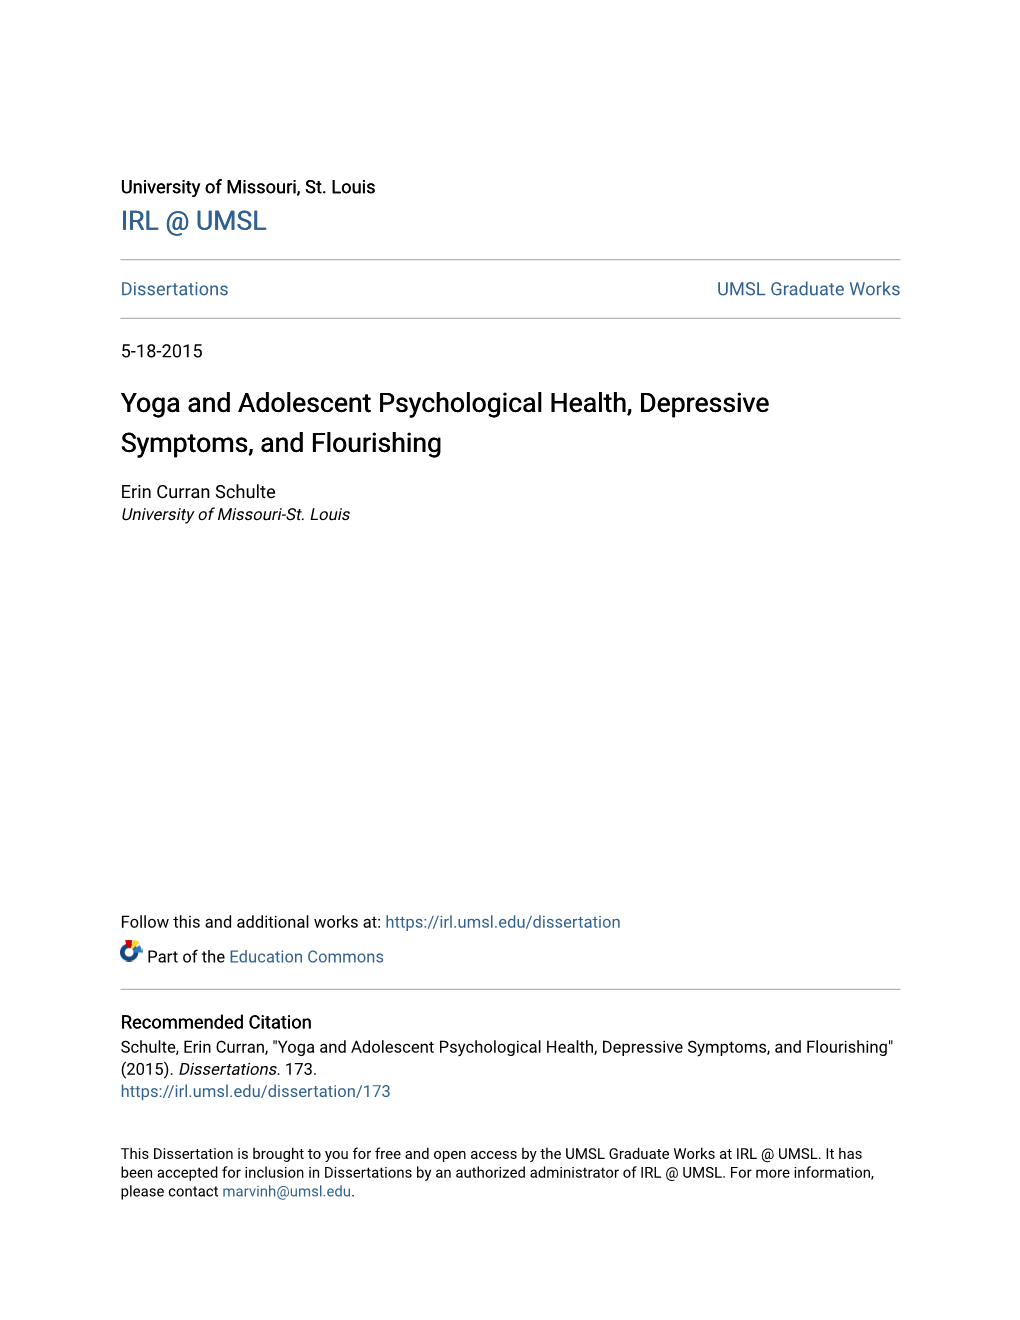 Yoga and Adolescent Psychological Health, Depressive Symptoms, and Flourishing